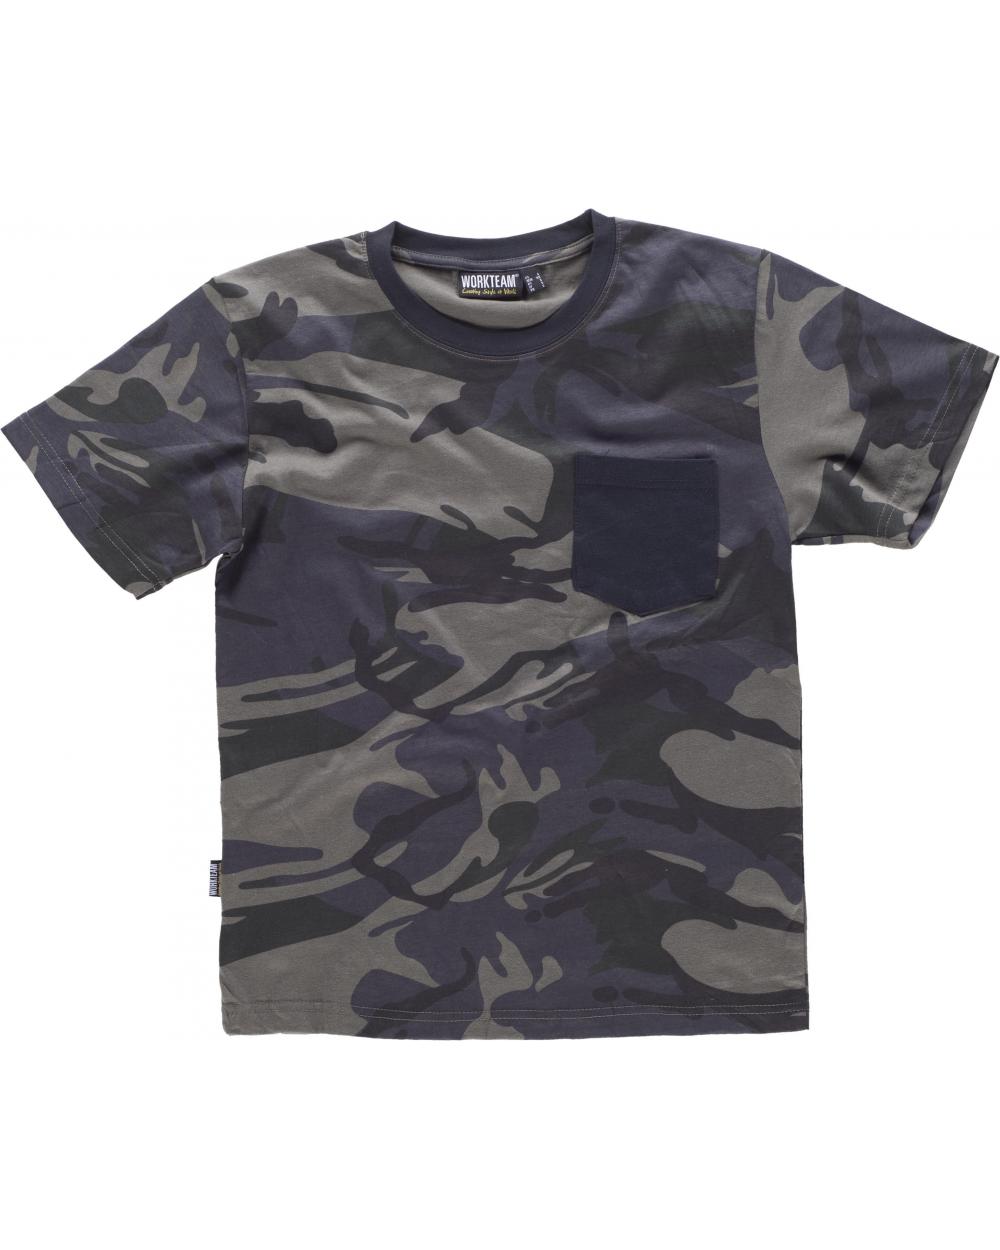 Comprar Camiseta de camuflaje S8520 Camuflage Gris+Negro online bataro delante